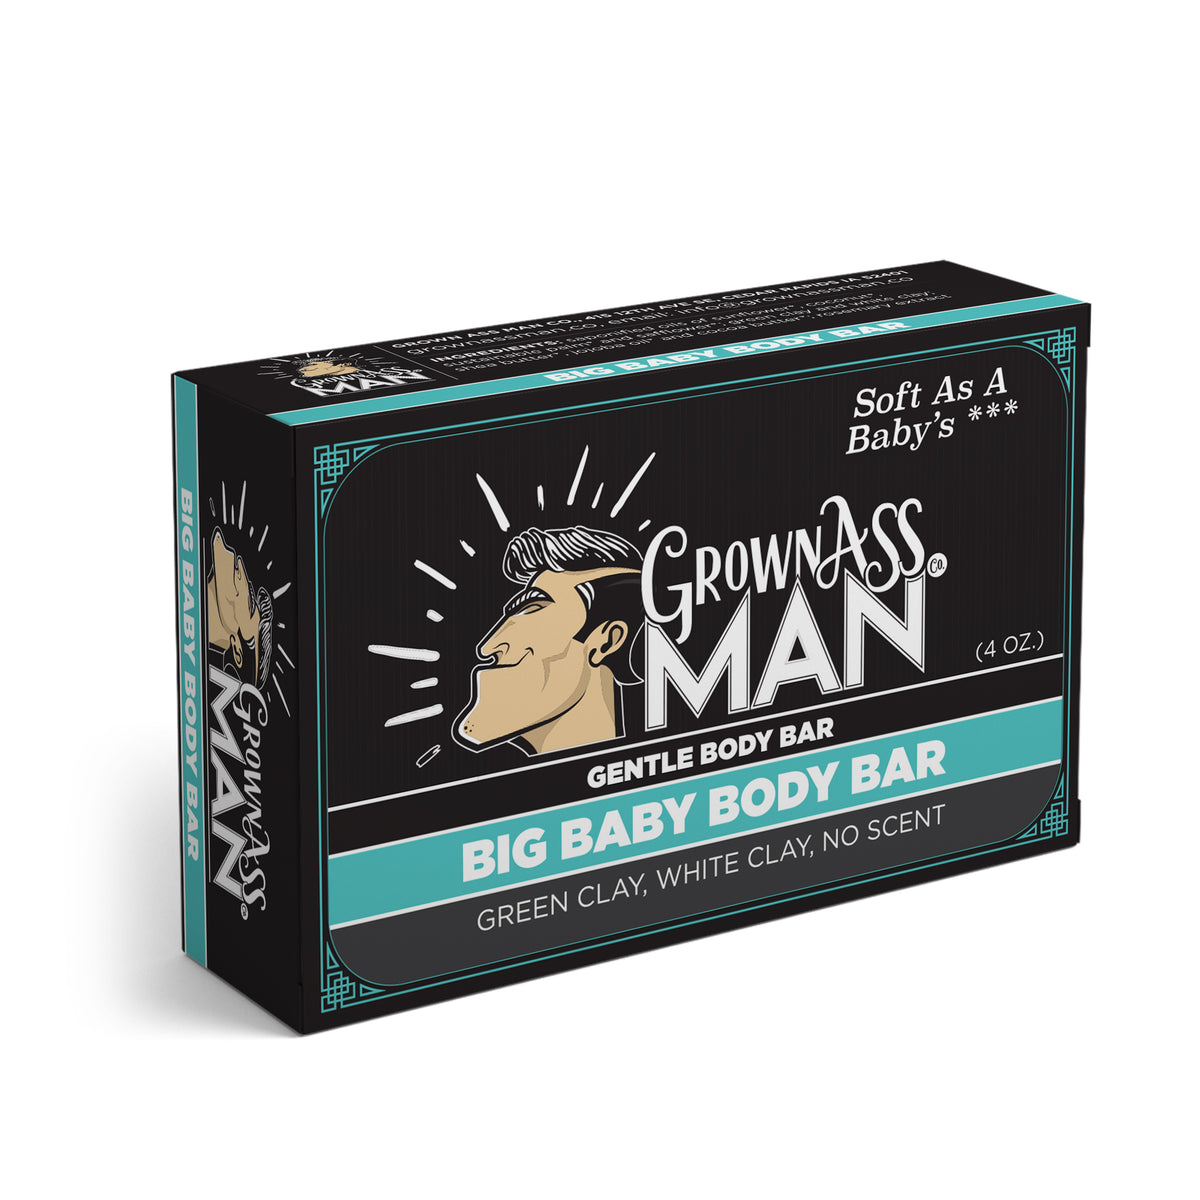 Body Bar Combo Pack - 6-Pack